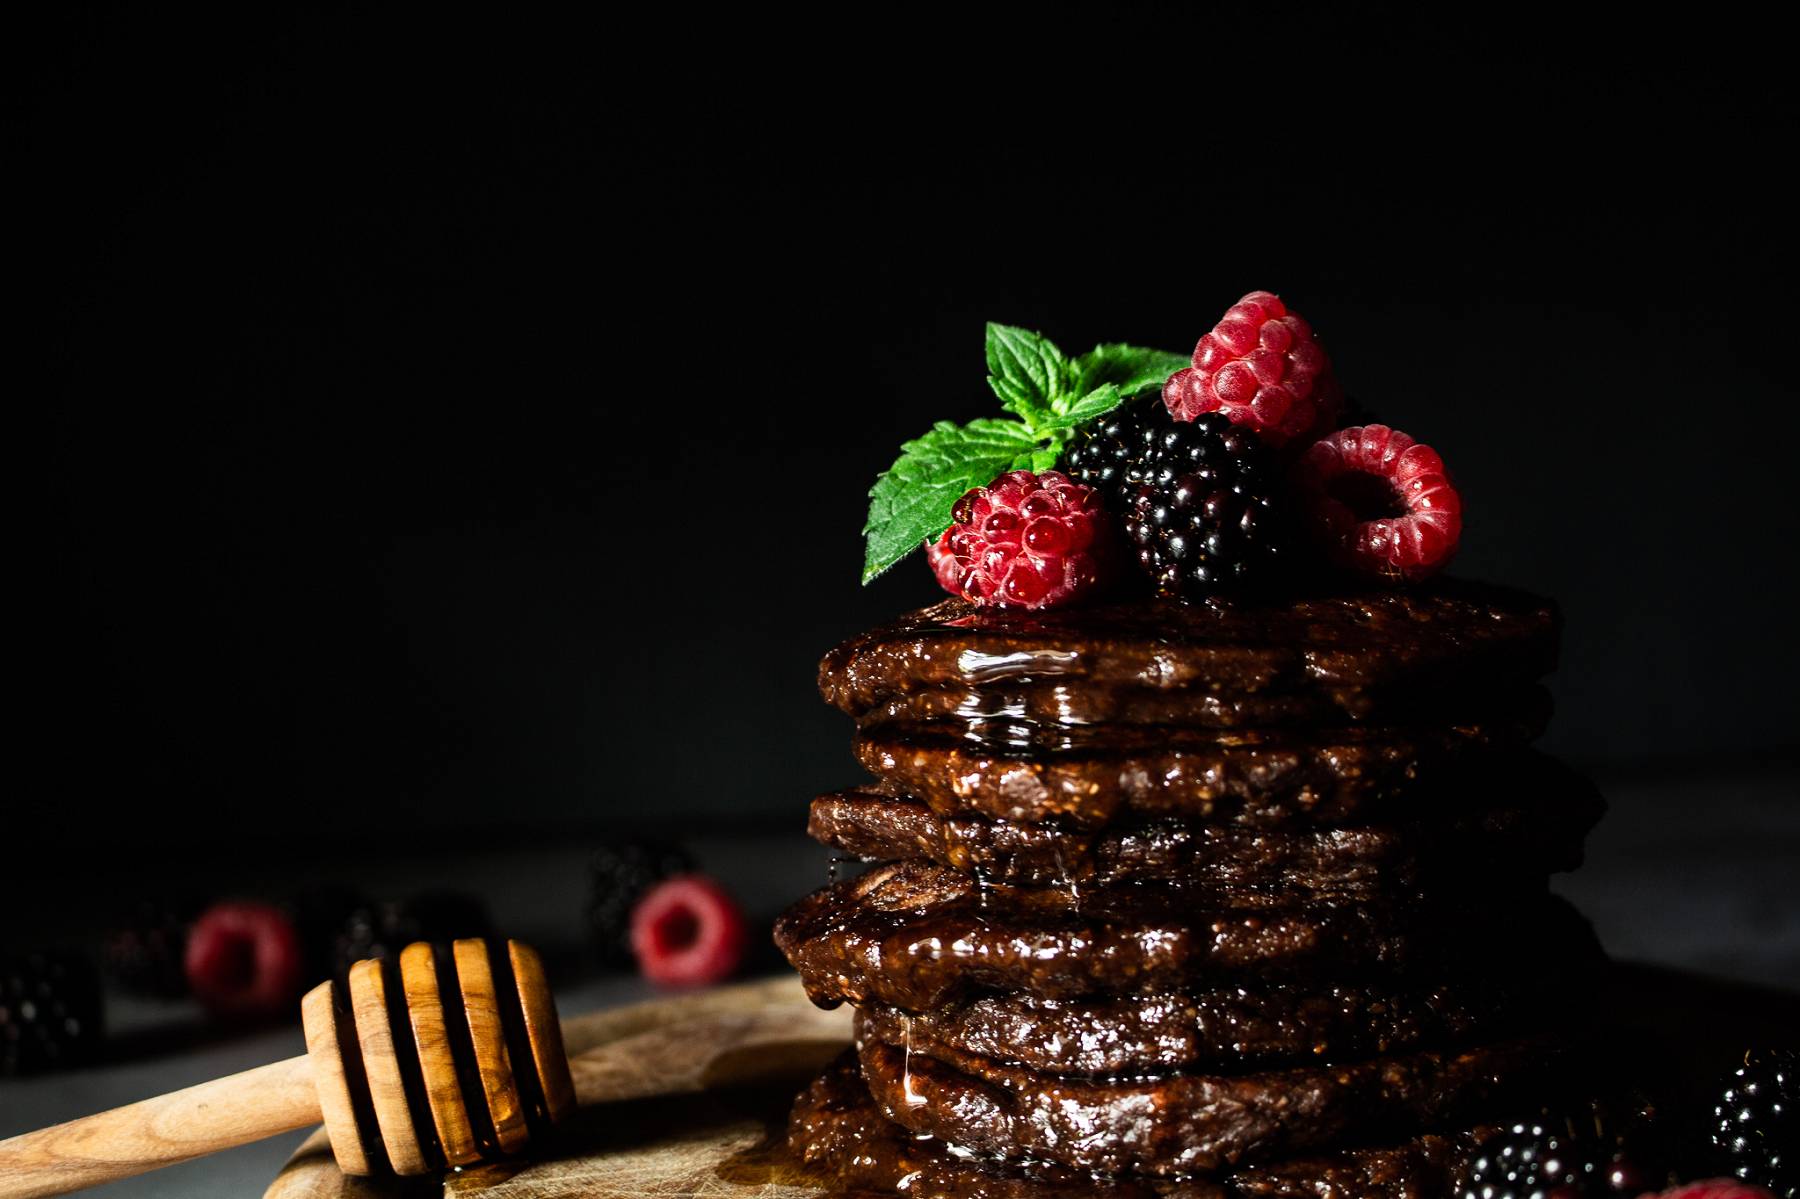 Schokoladen Protein Pancakes mit Beeren